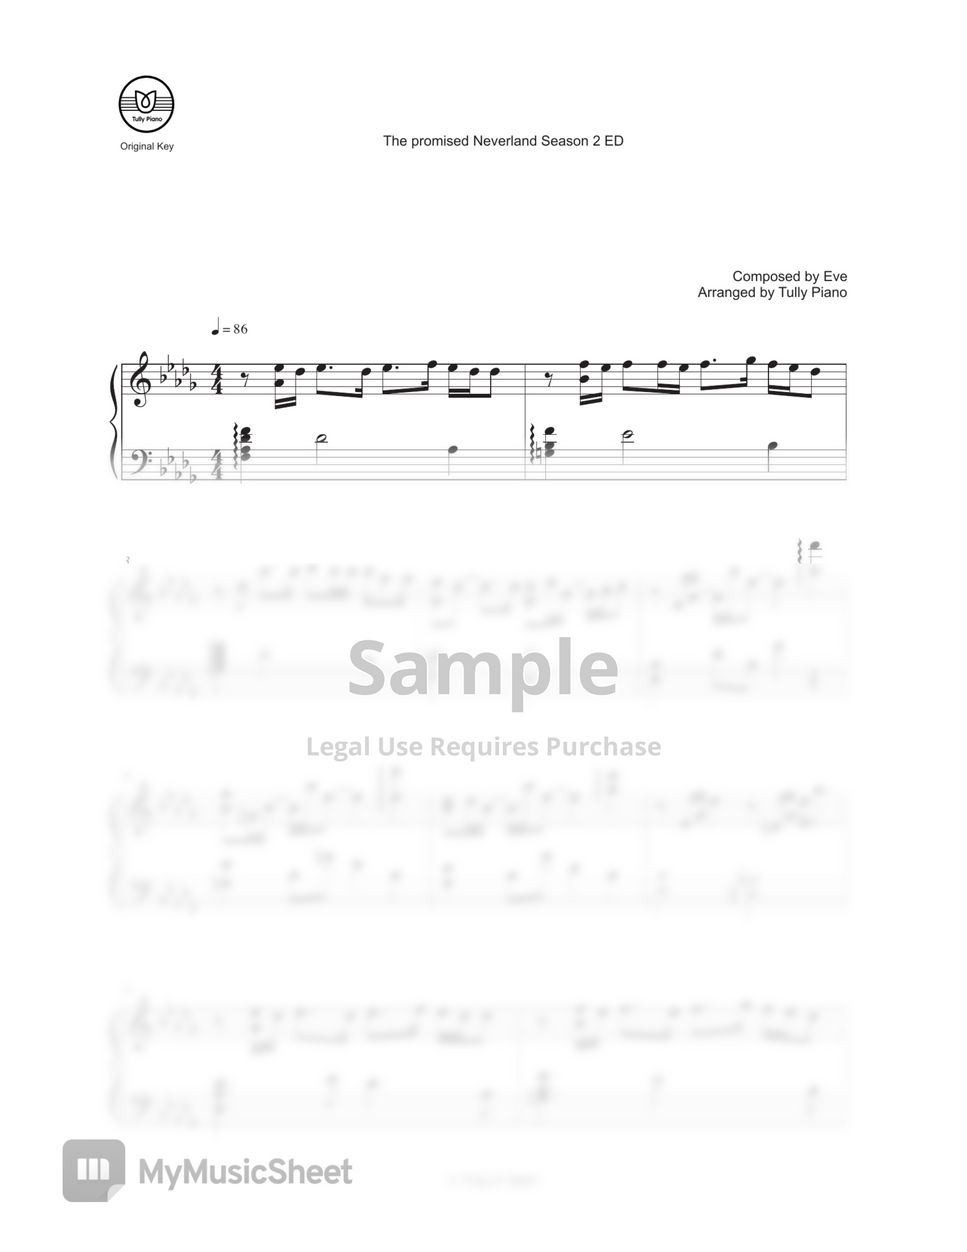 The promised Neverland 2 ED - Mahou (마법 魔法) (Original Key) by Tully Piano